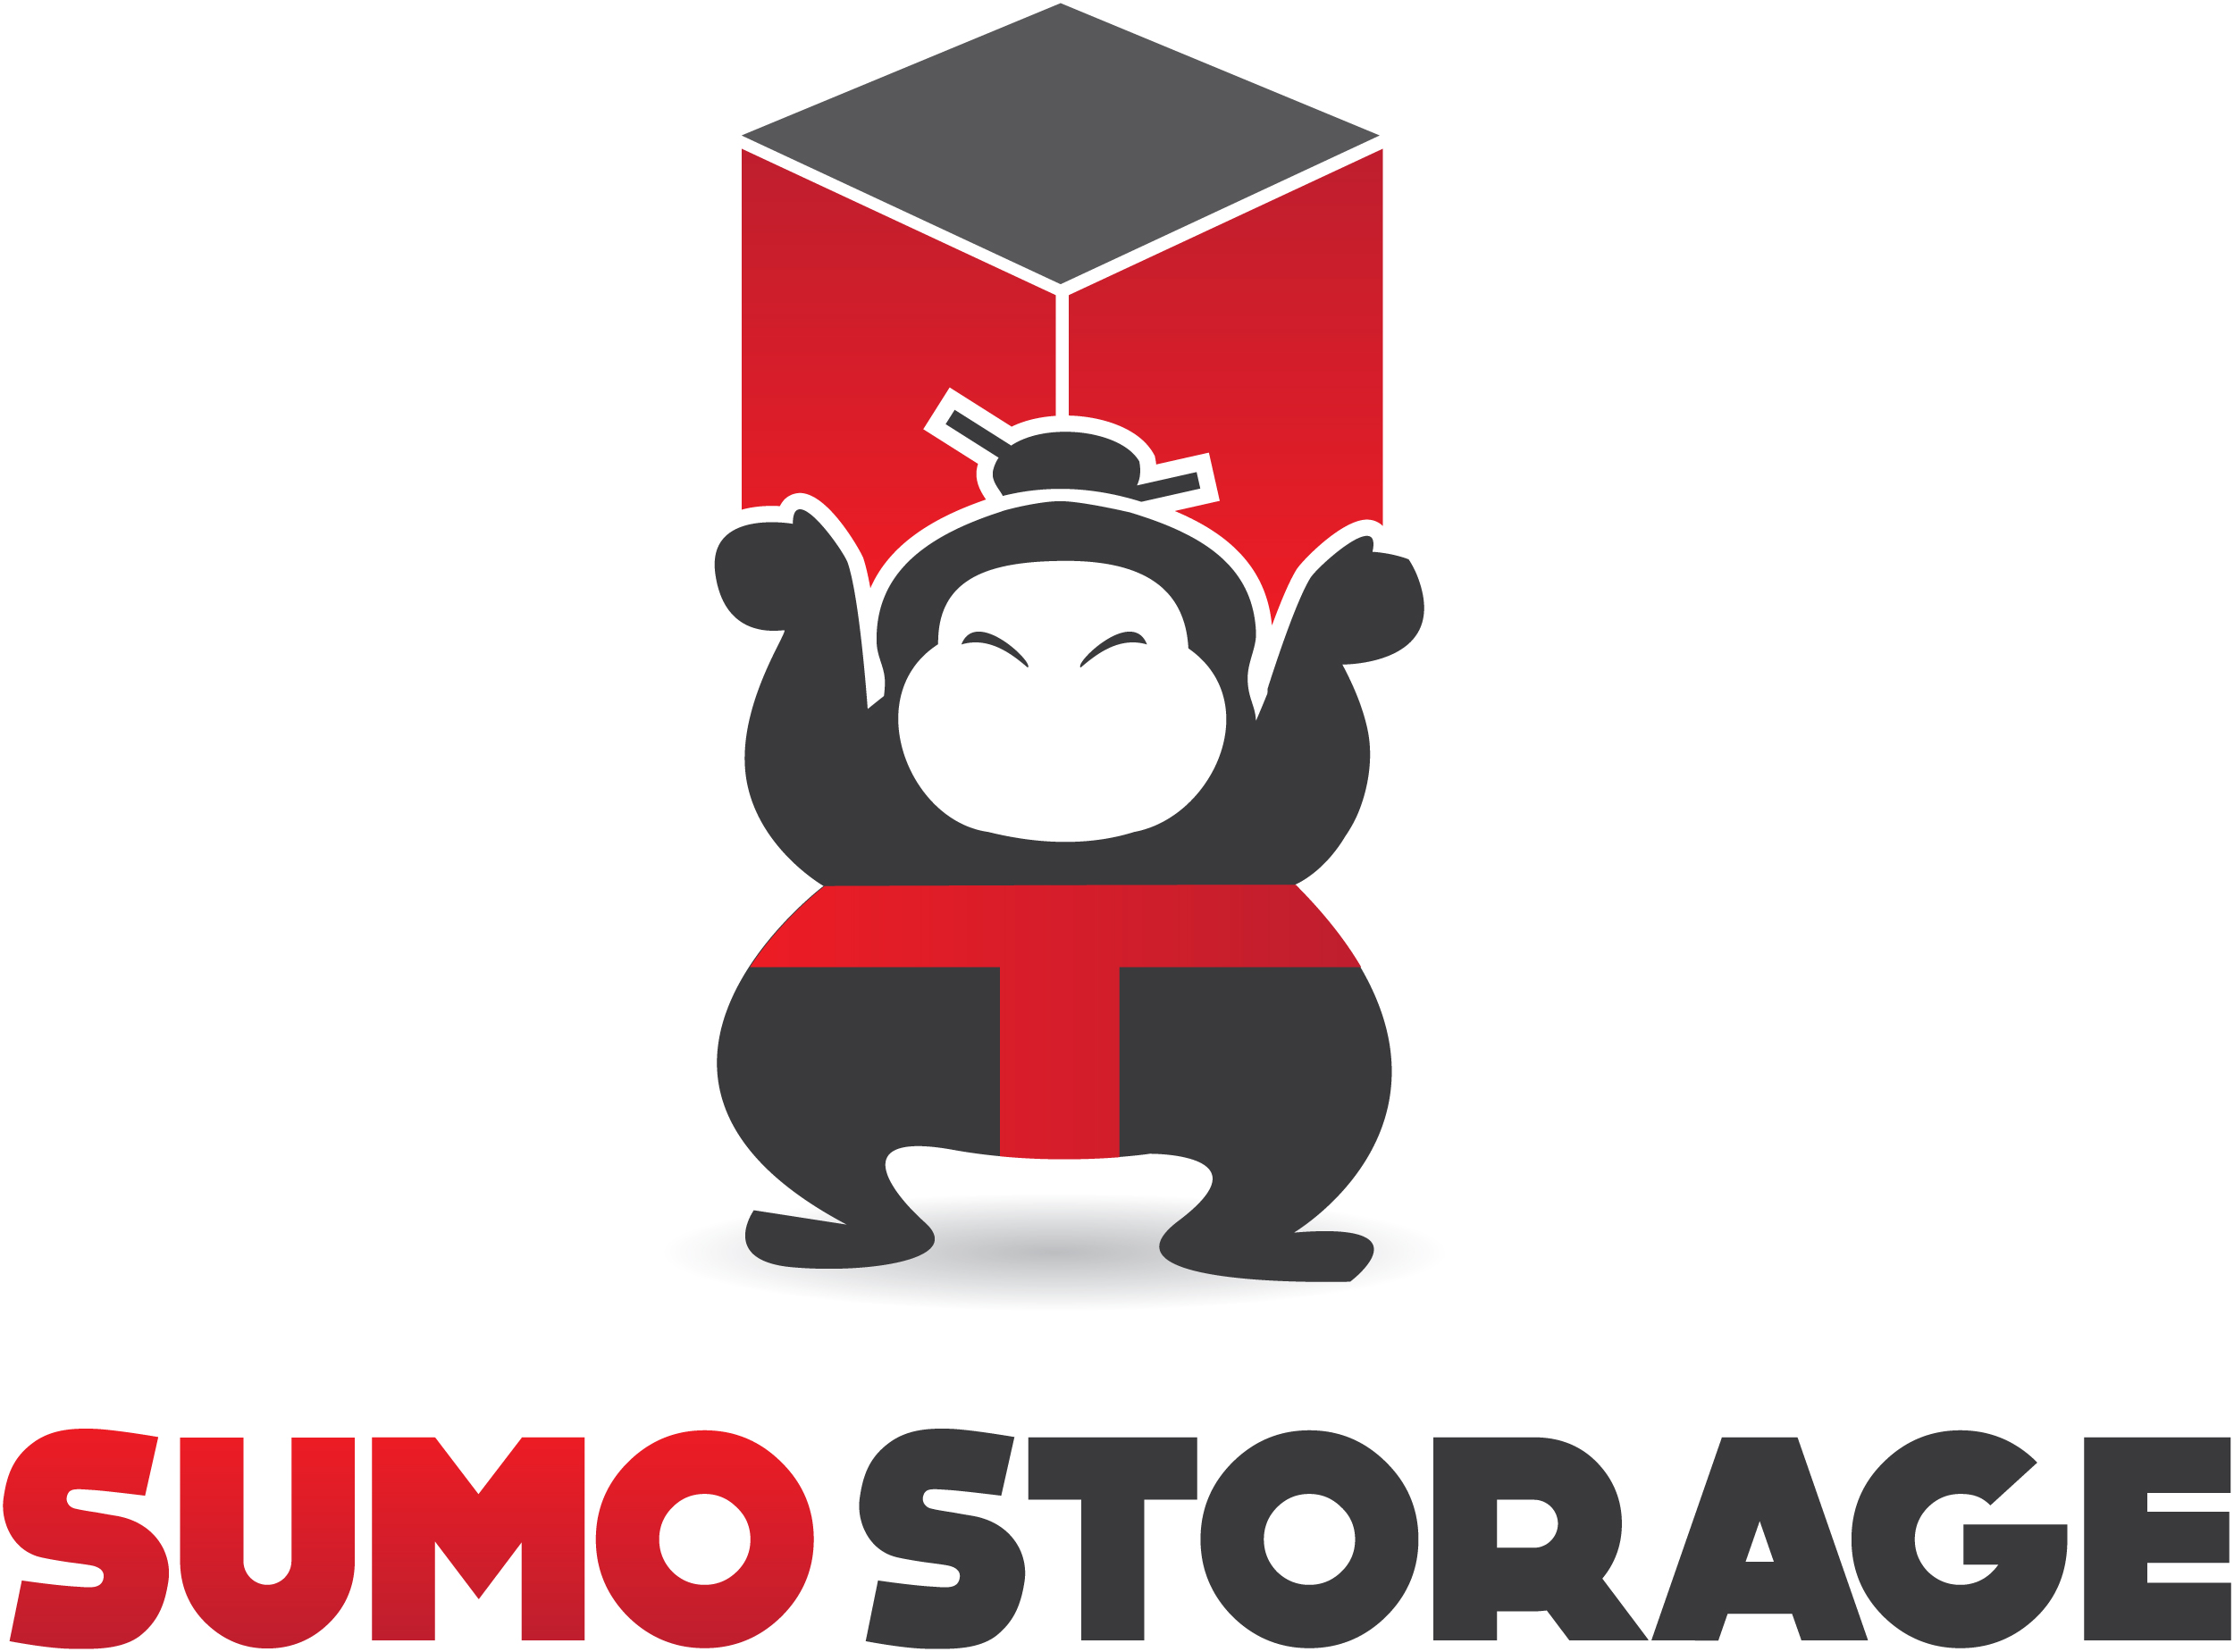 Sumo Storage